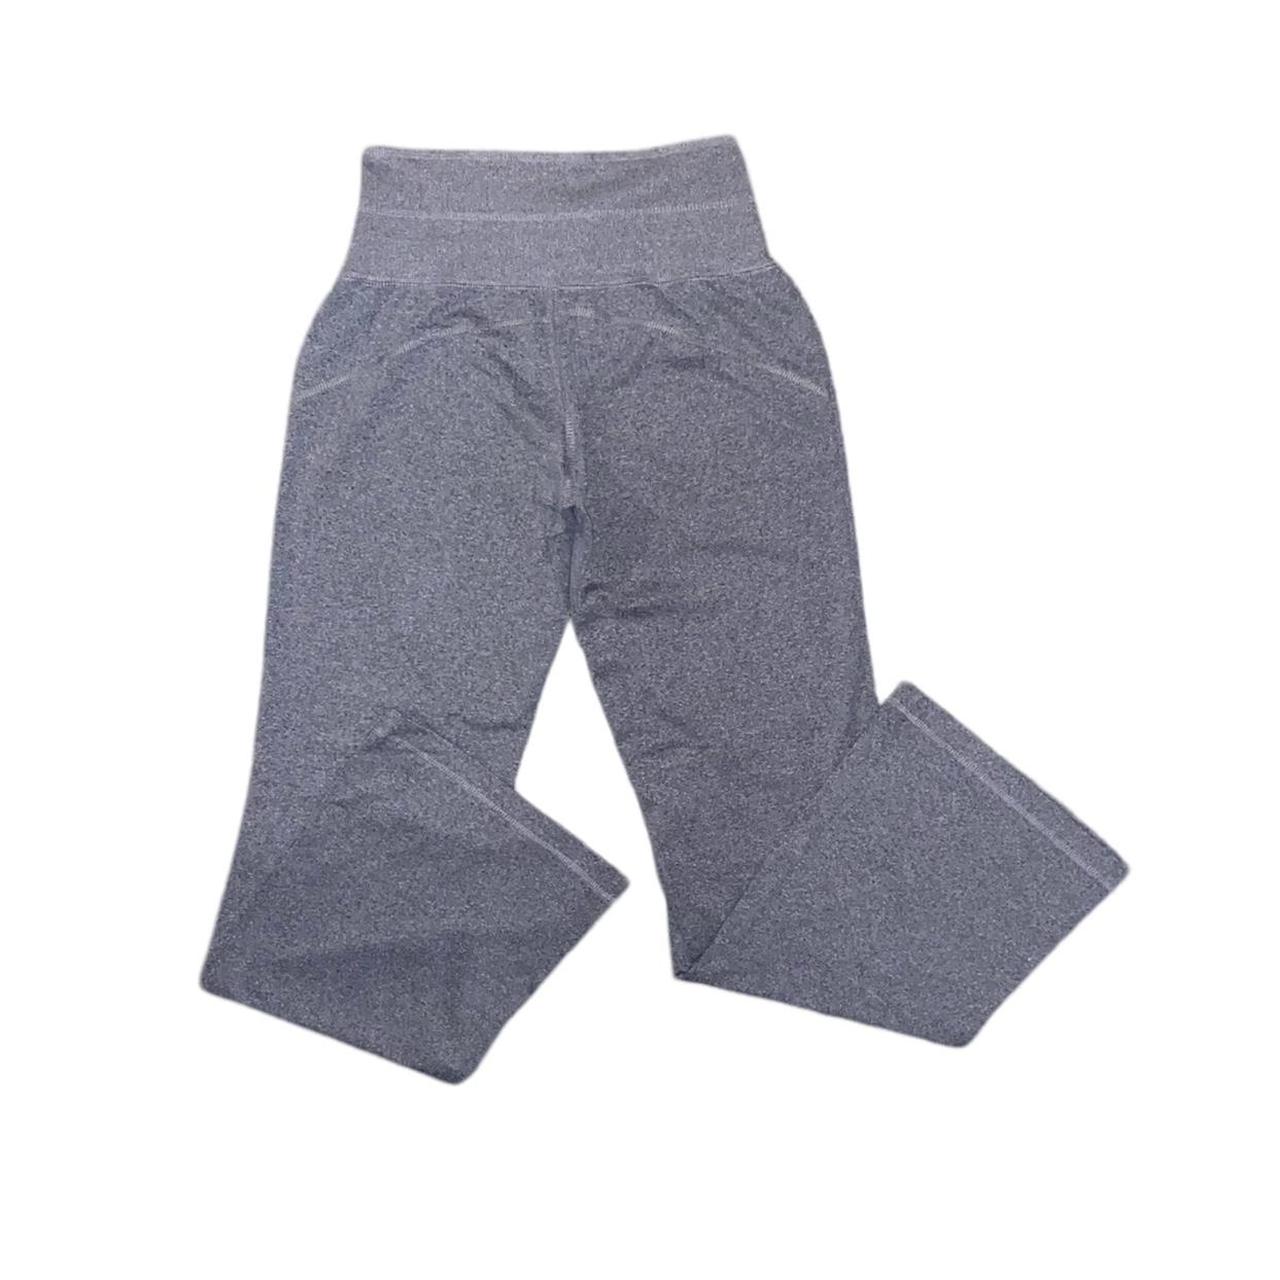 Tek gear flared yoga pants wide waistband steel gray - Depop